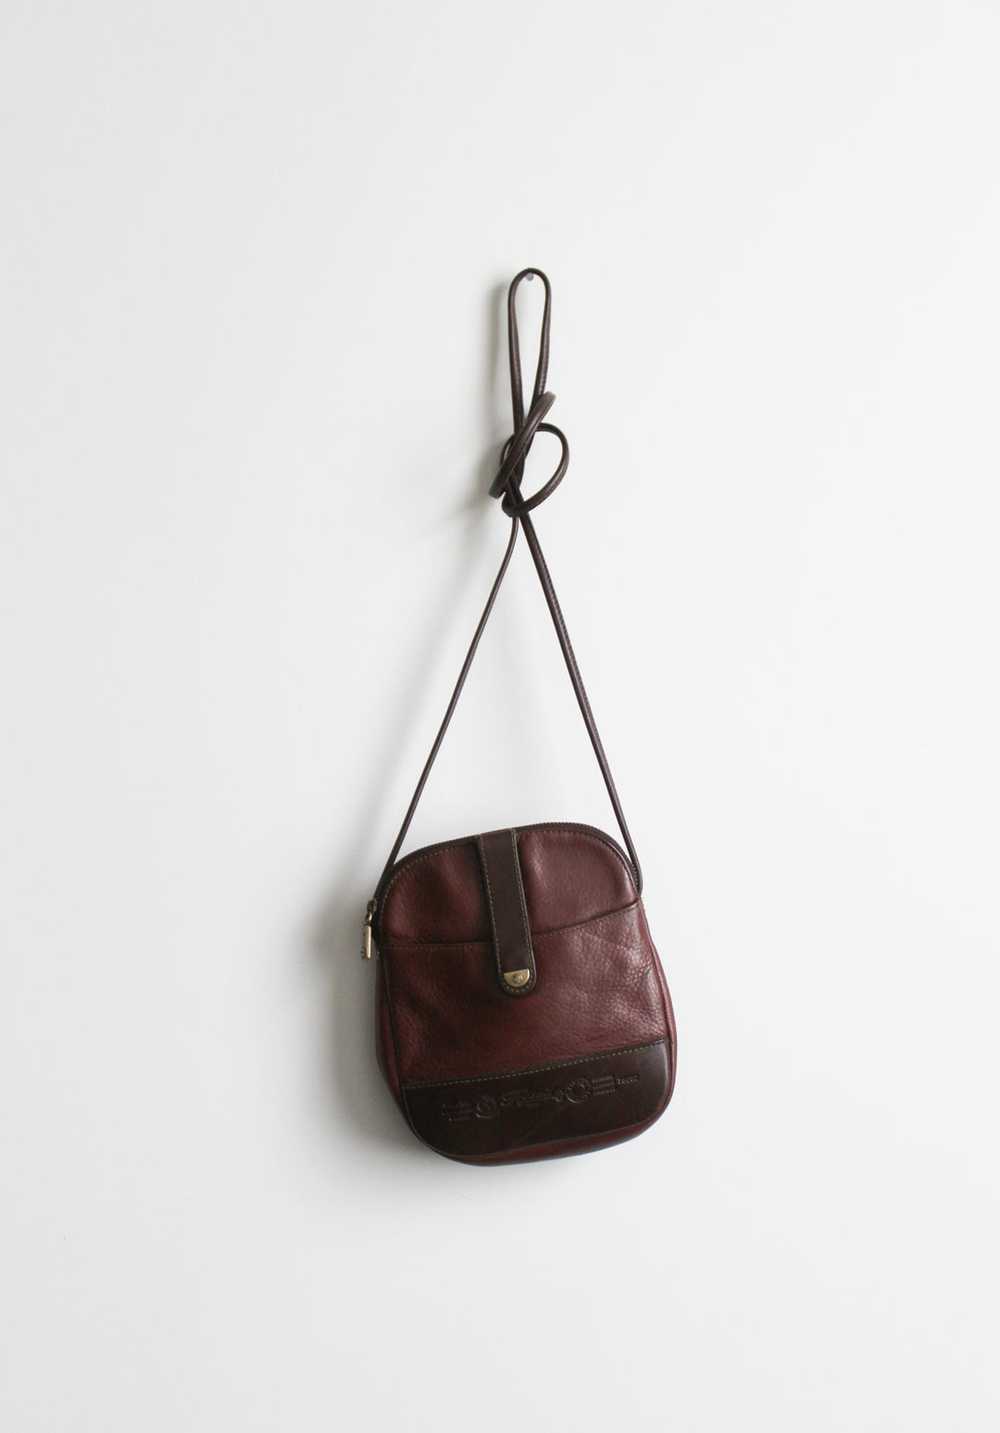 Genuine leather Waist Hip Bag